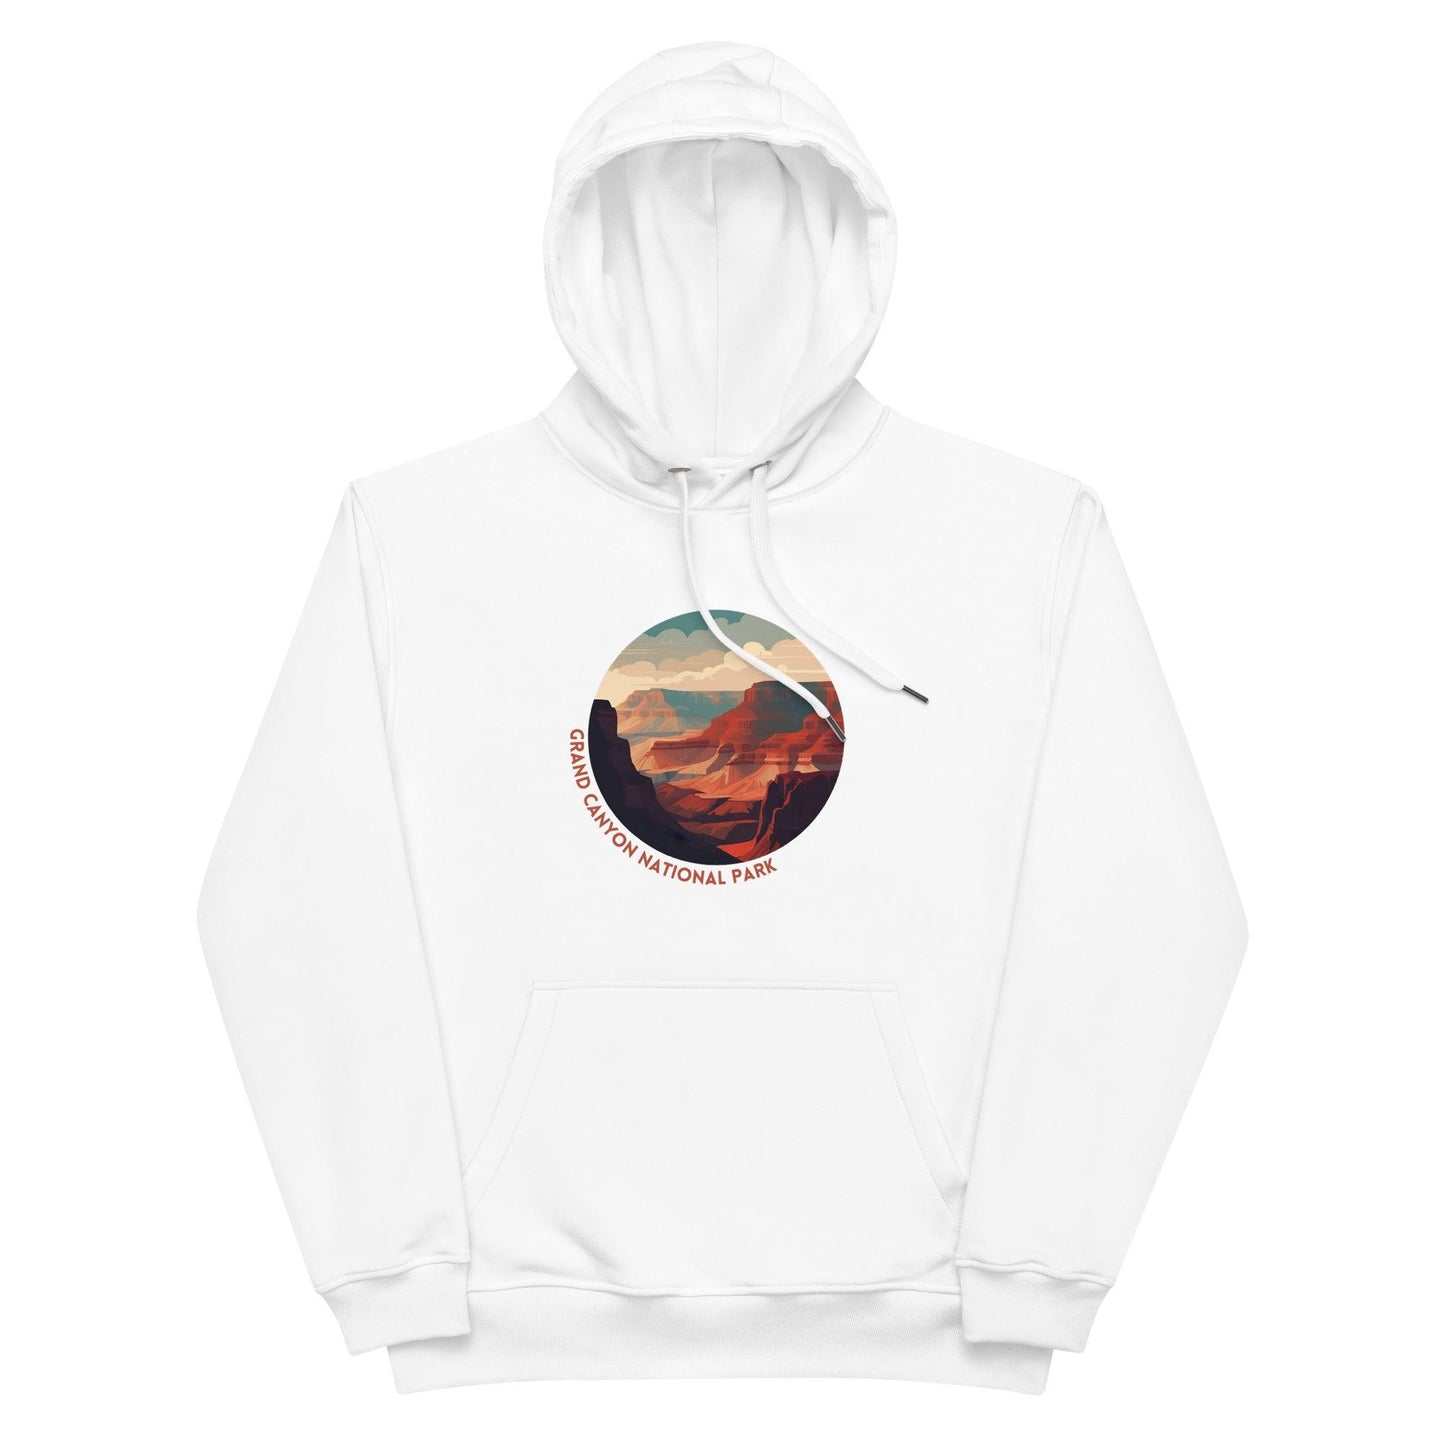 Grand Canyon hoodie